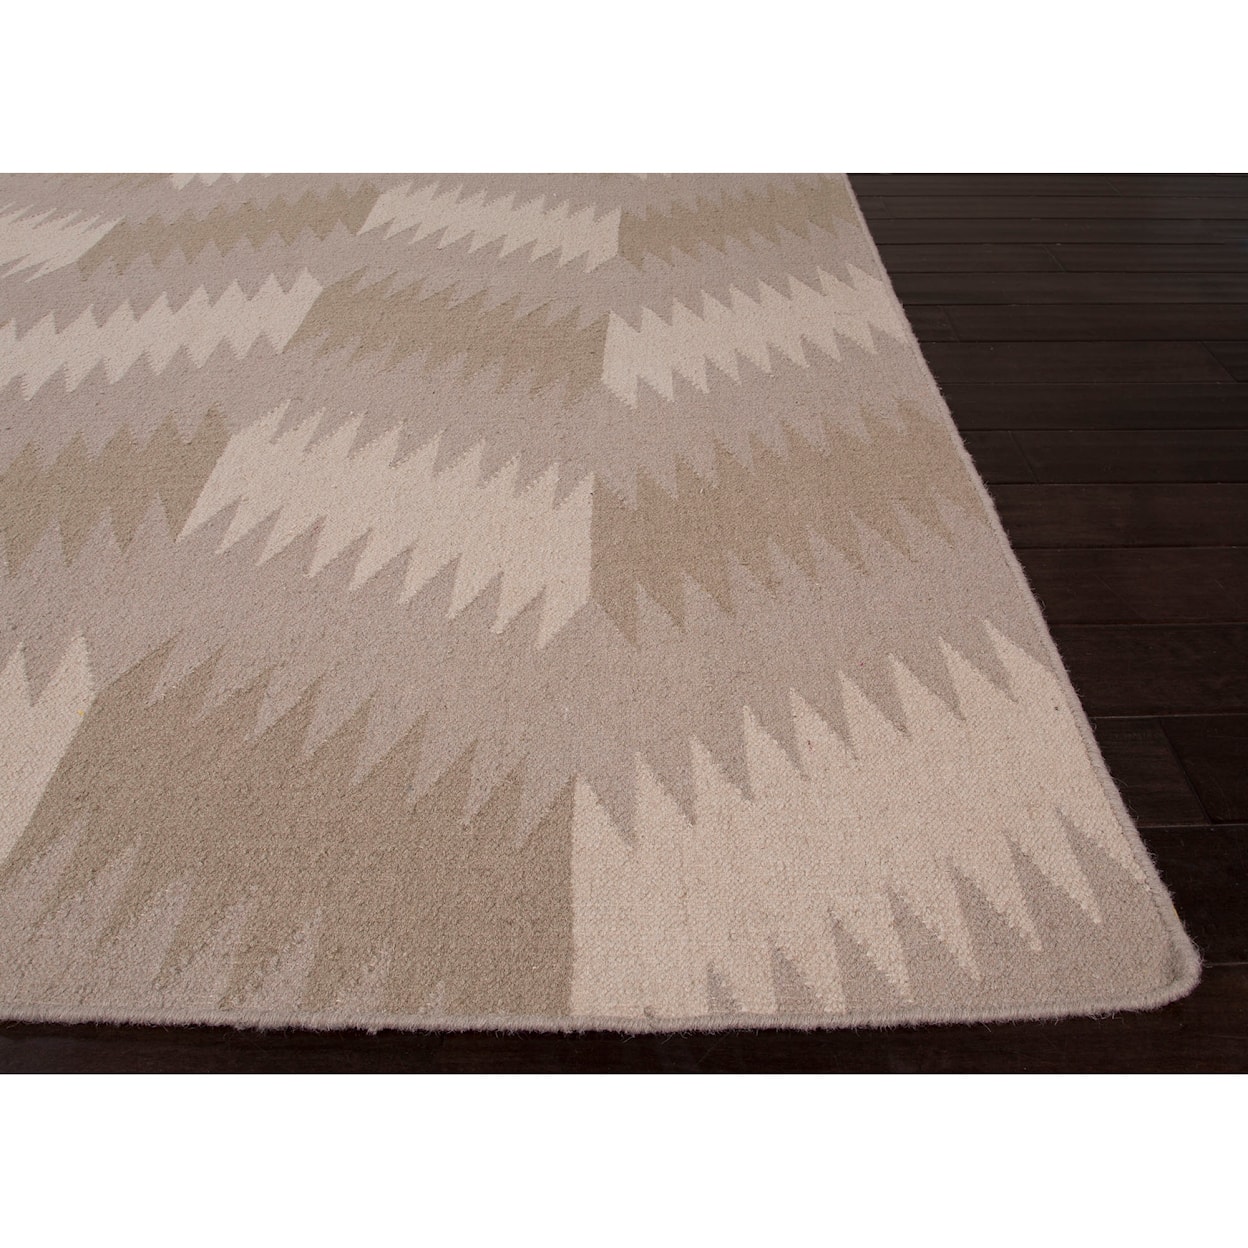 JAIPUR Living Traditions Modern Flat Weave 2 x 3 Rug